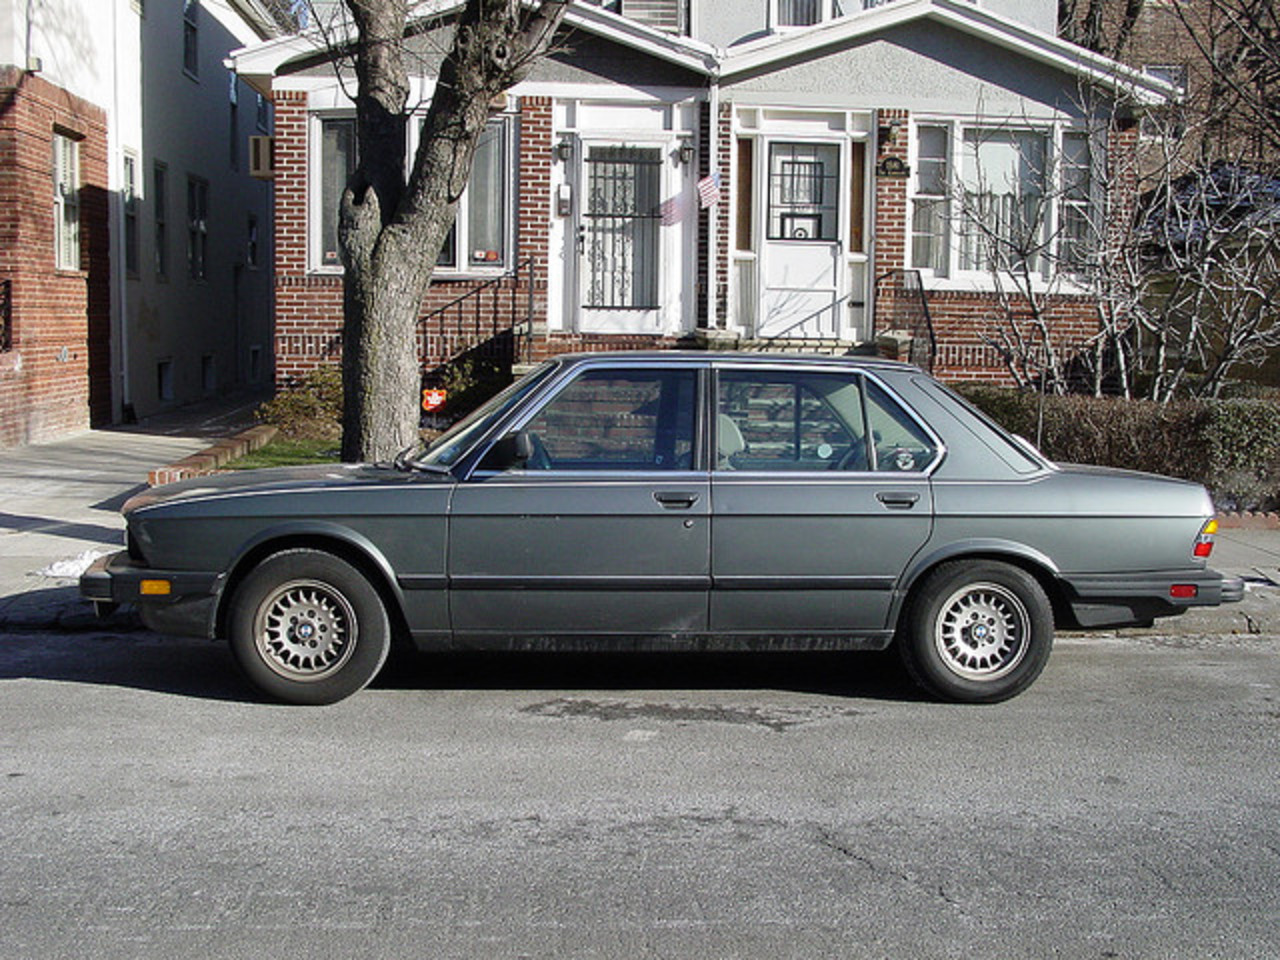 BMW 528e (E28) | Flickr - Photo Sharing!